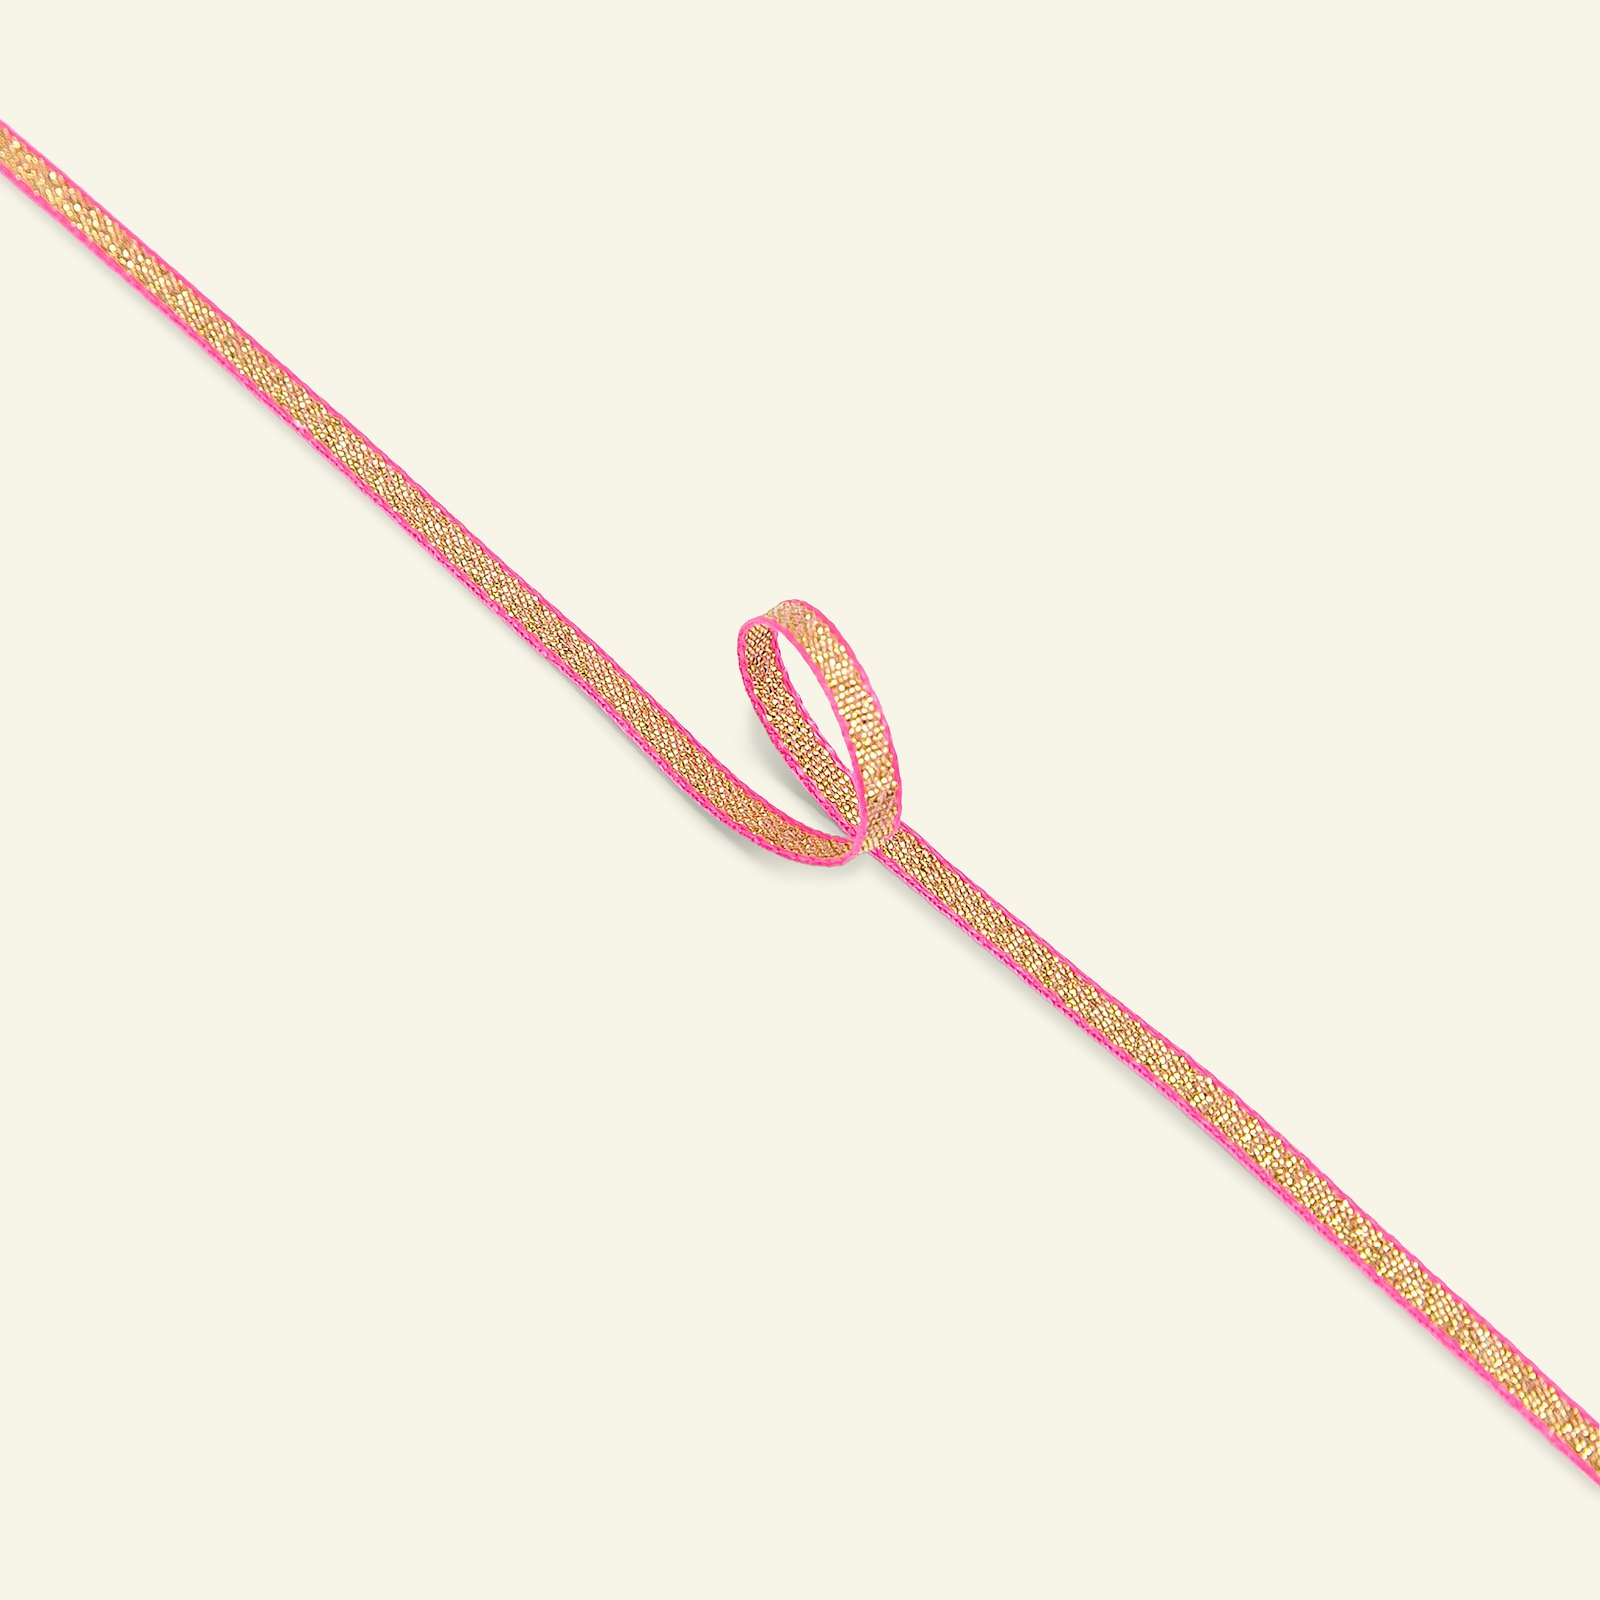 Band gewebt 3mm pink/goldfarbig 3m 21436_pack